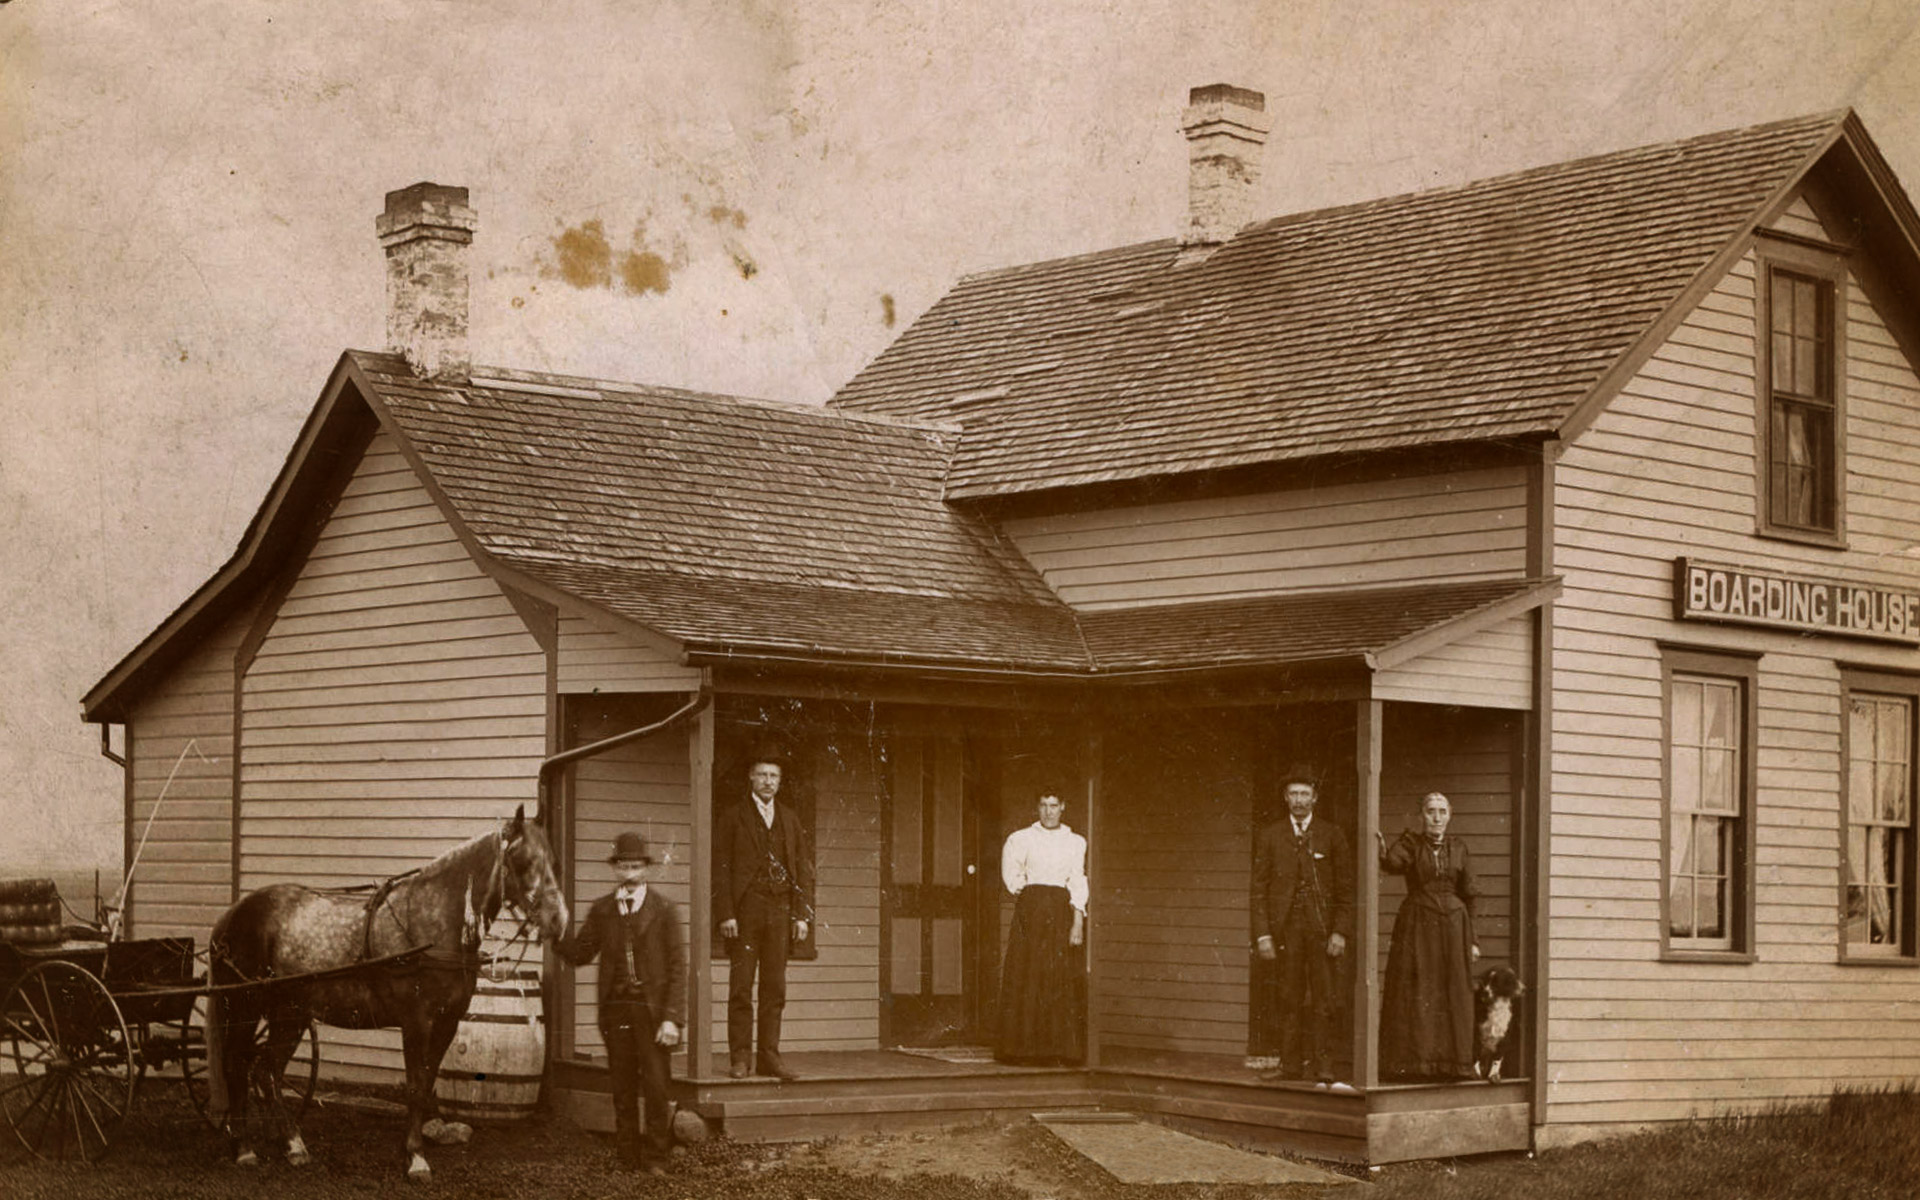 Boarding House in the Dakotas, c. 1890